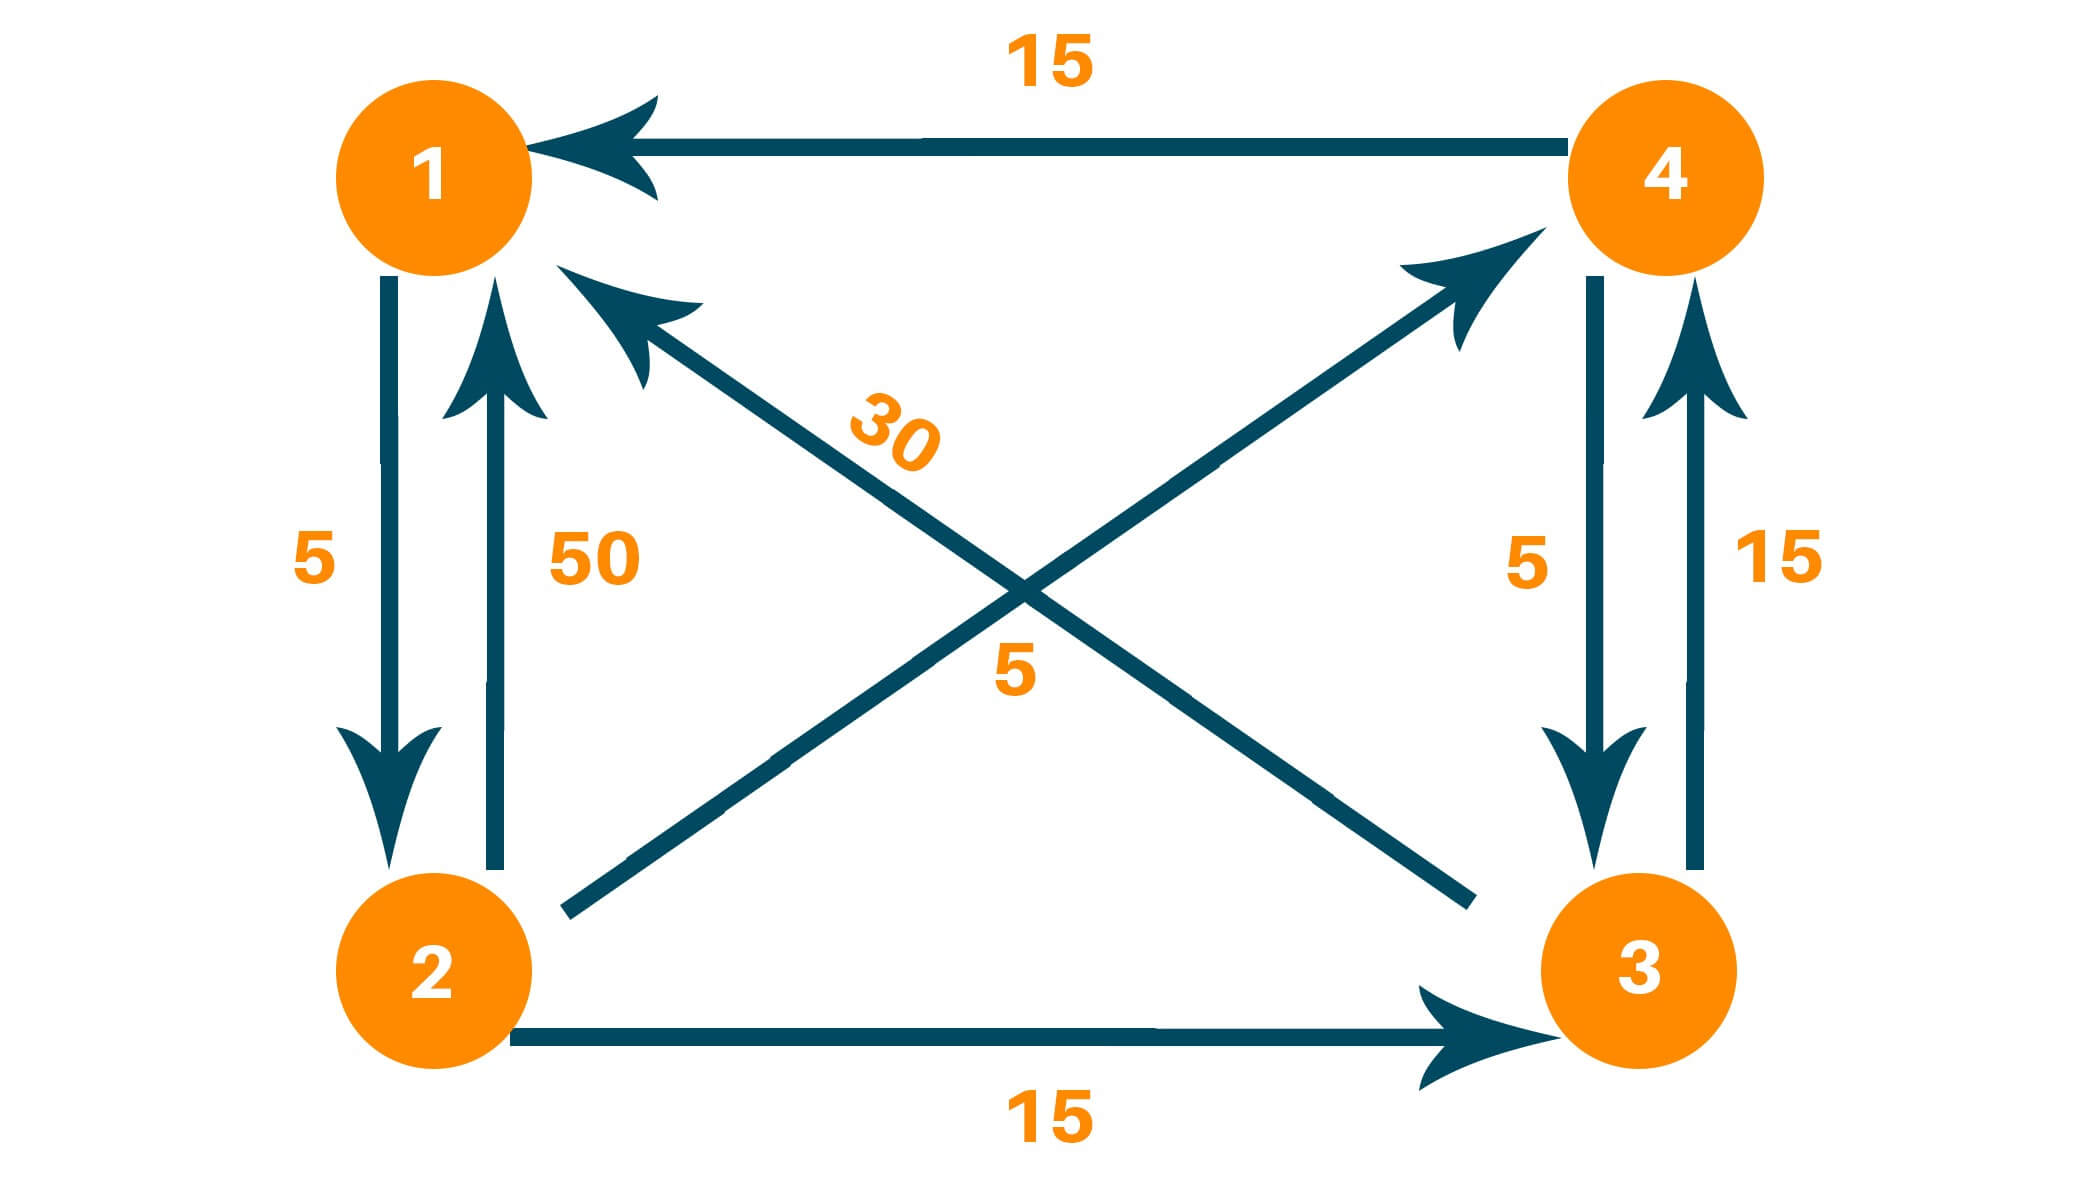 Floyd warshall algorithm example